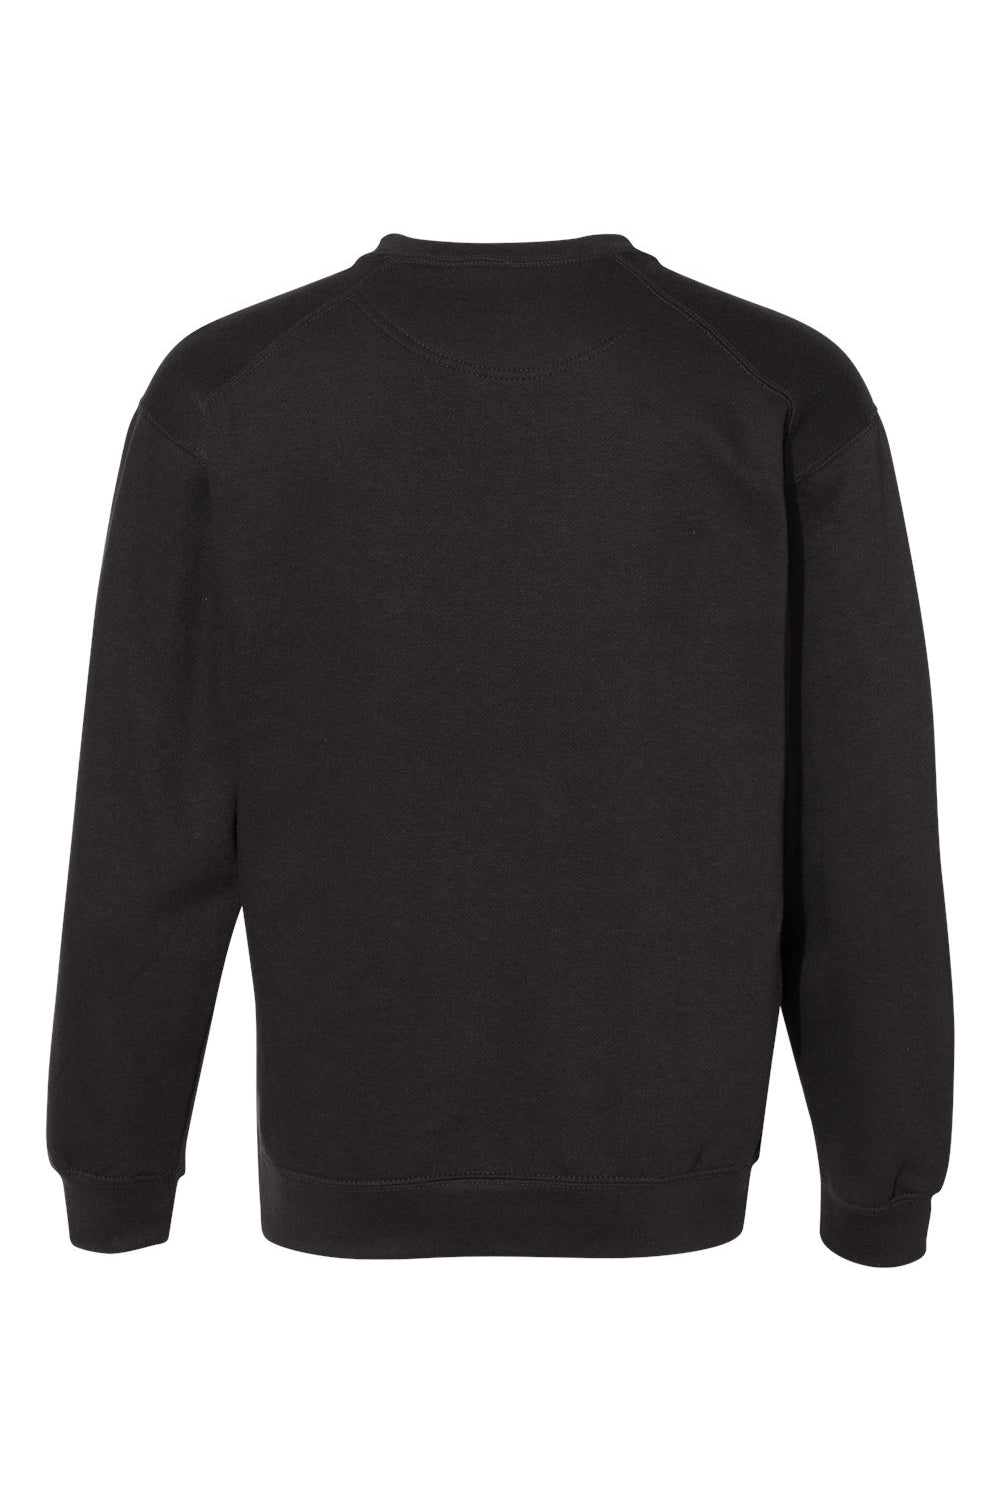 C2 Sport 5501 Mens Crewneck Sweatshirt Black Flat Back